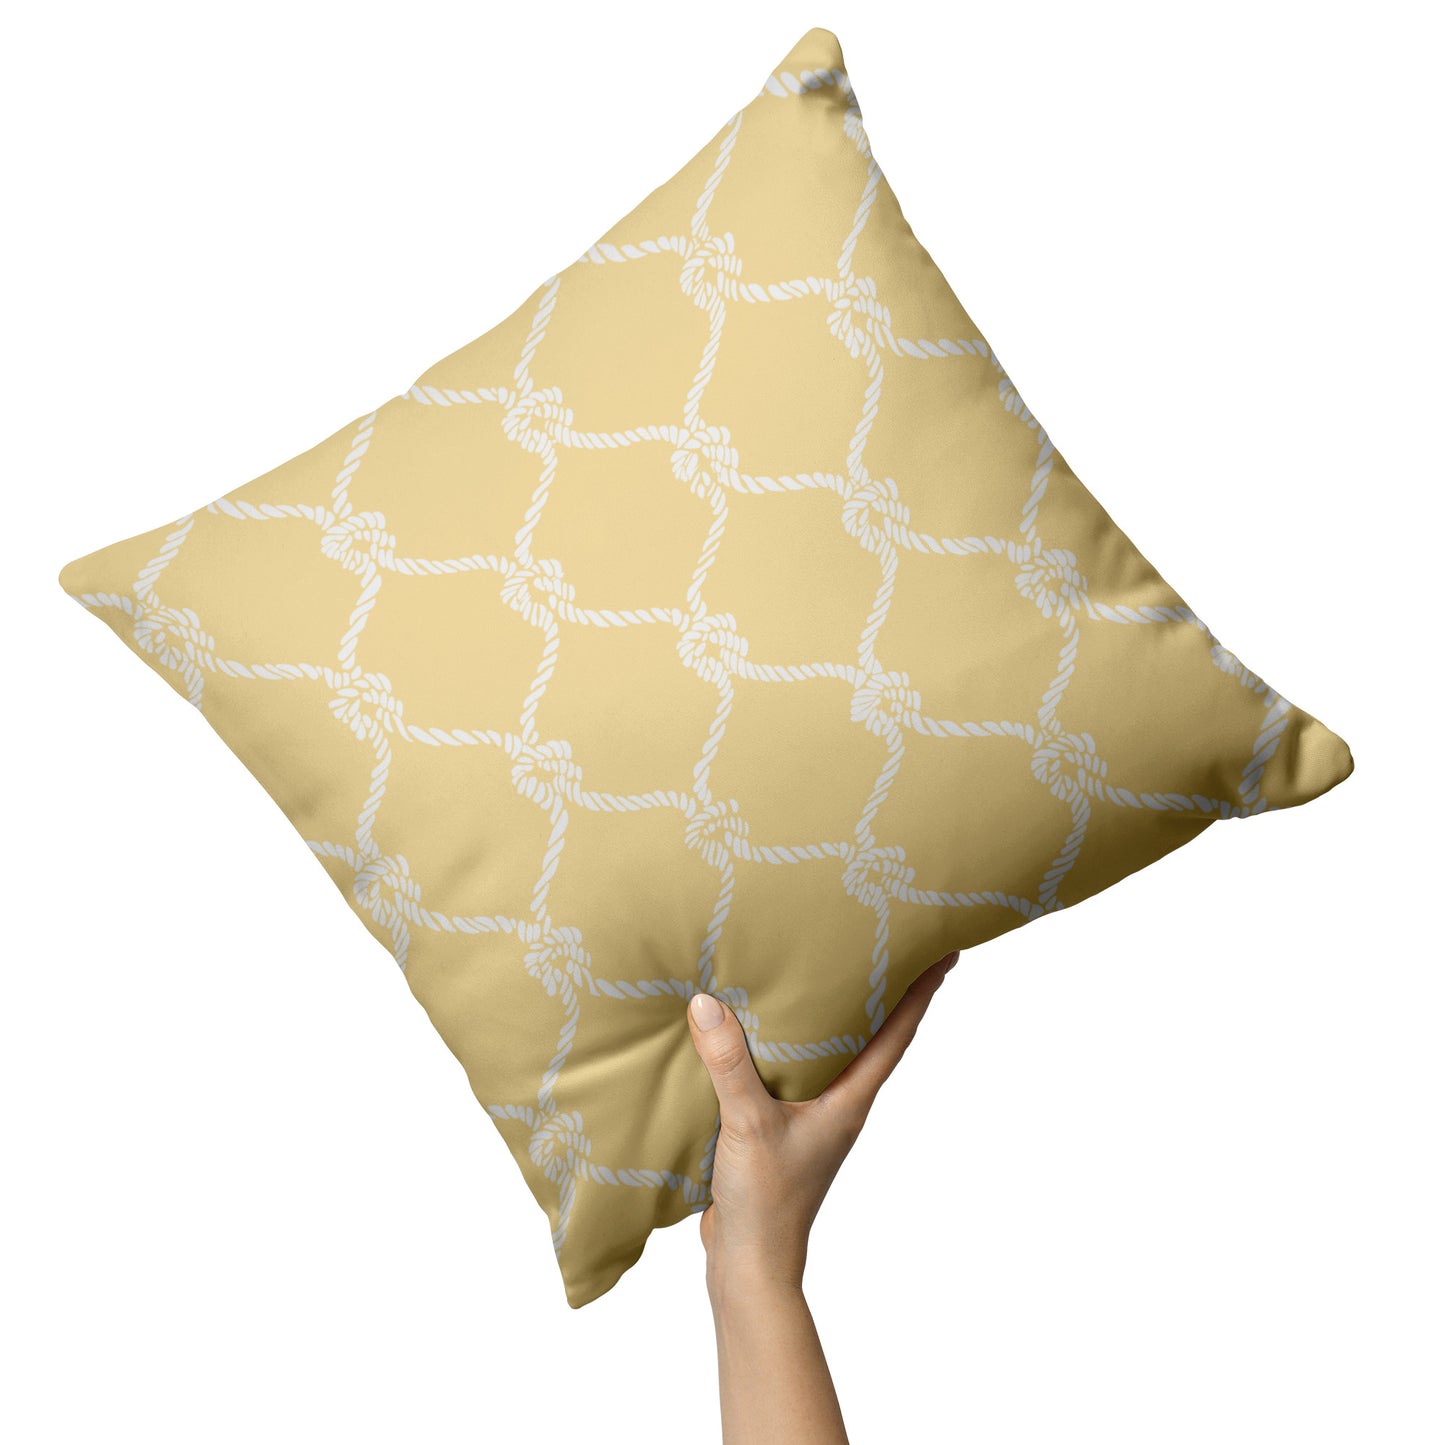 Nautical Netting Design on Yellow Background, Throw Pillow